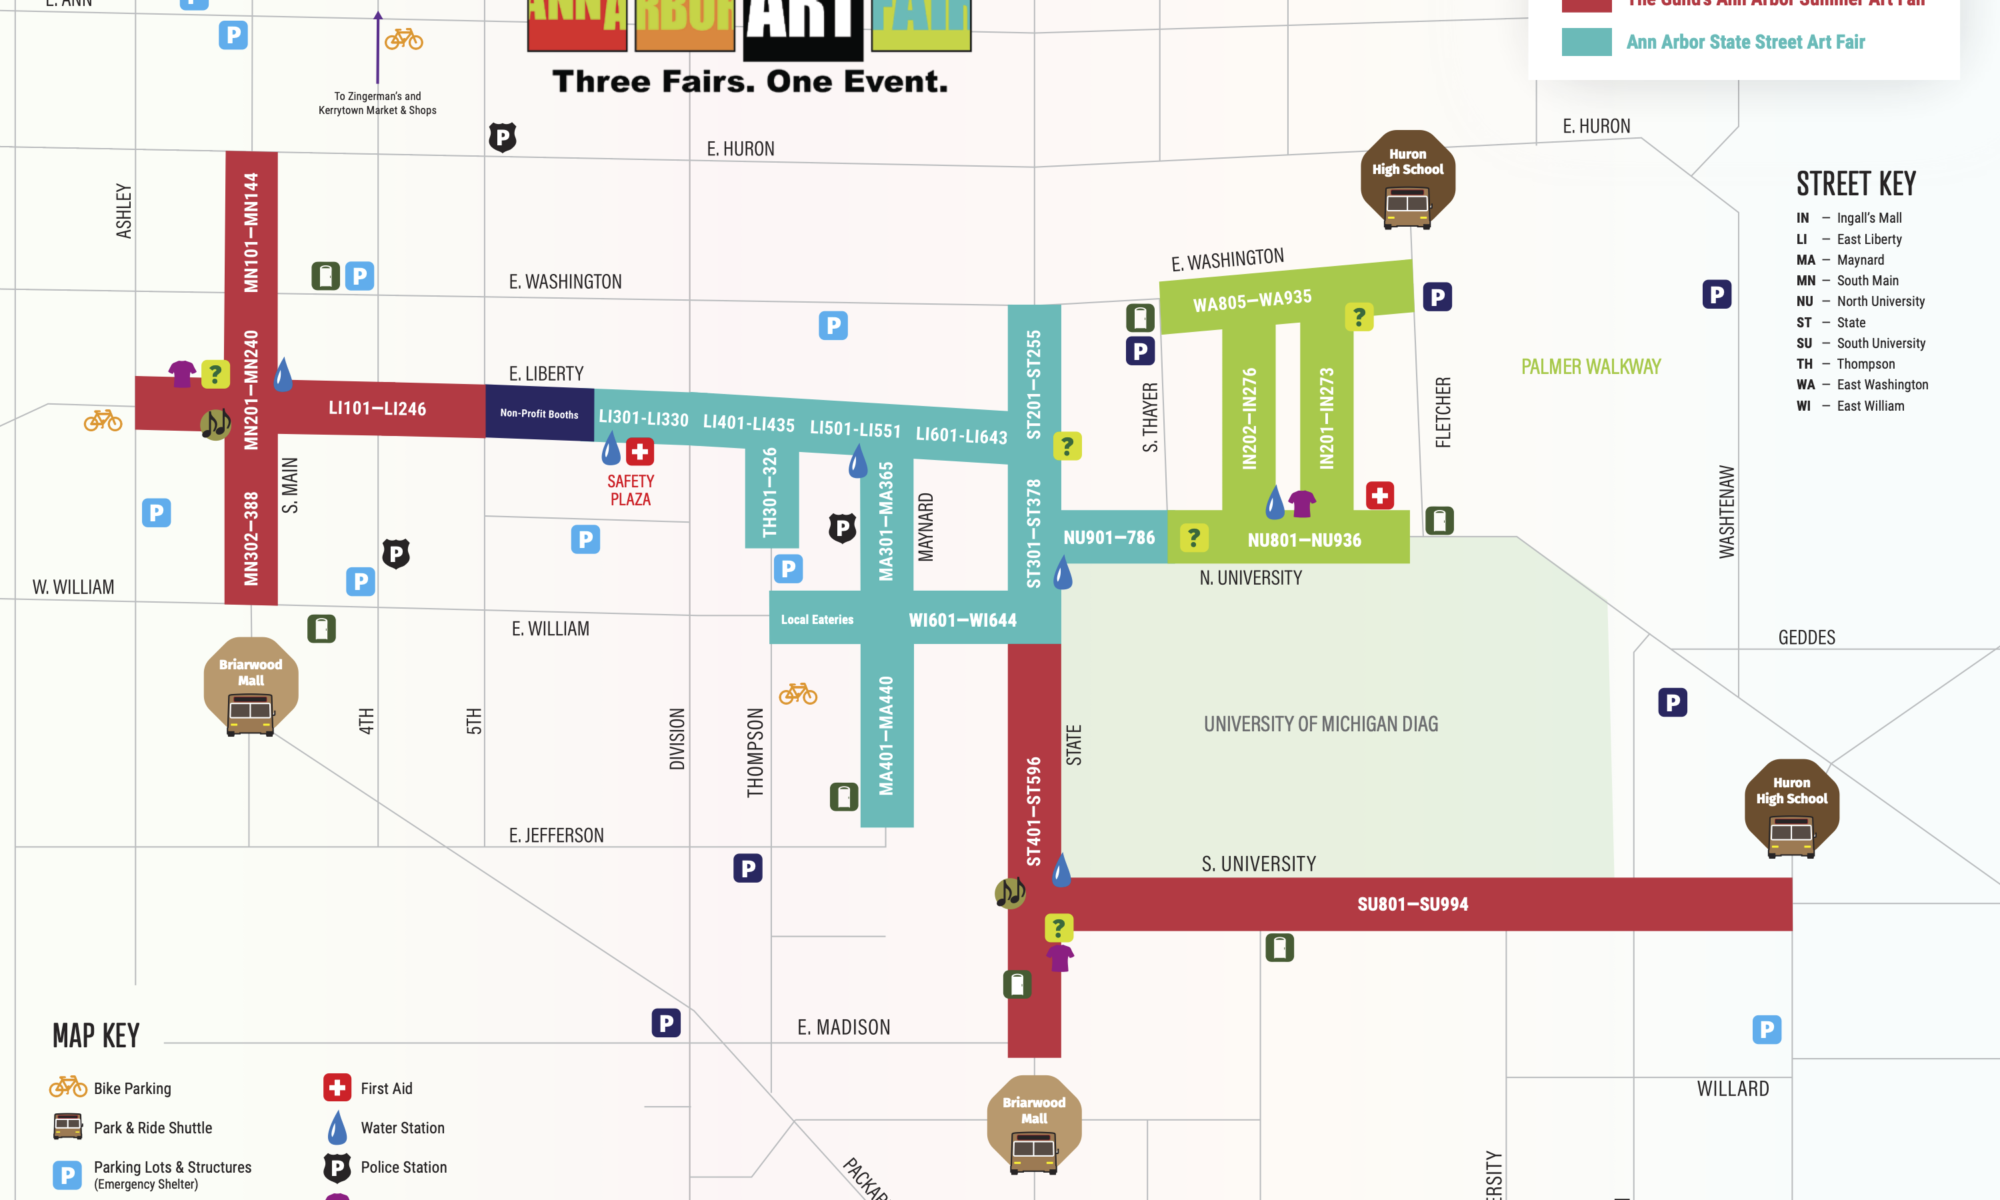 Map of the Ann Arbor Art Fair